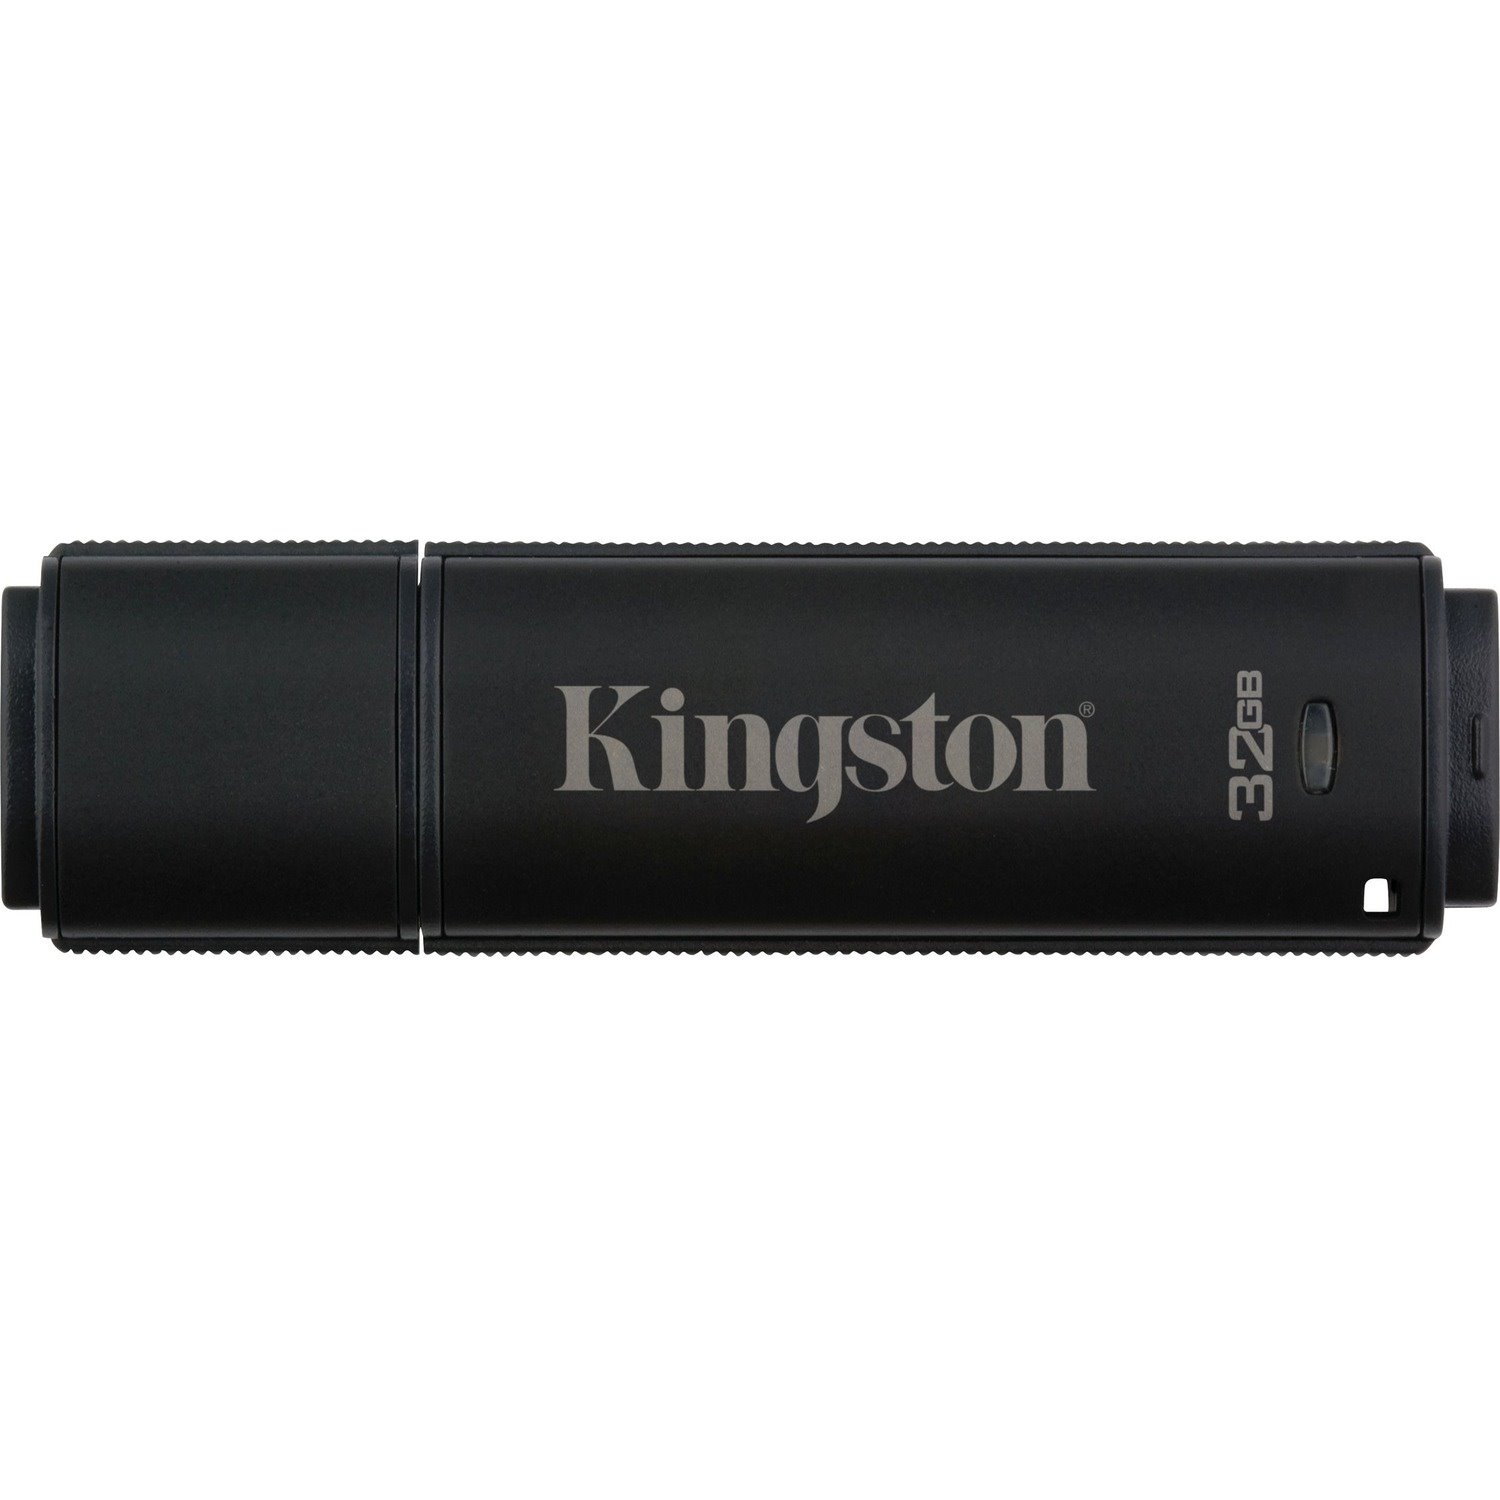 Kingston DataTraveler 4000 32 GB USB Flash Drive